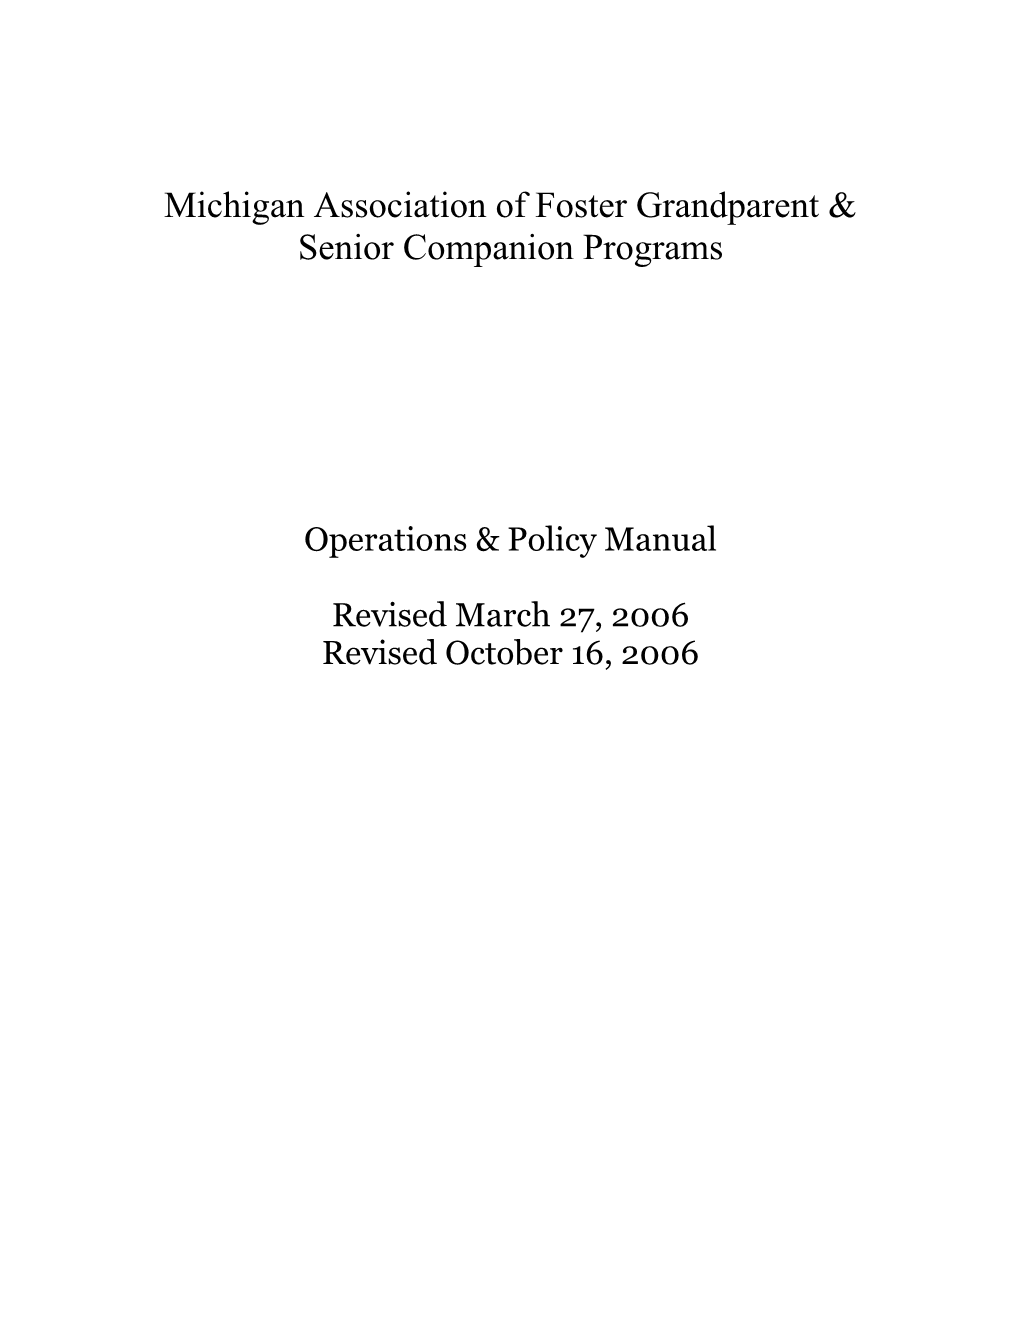 Michigan Association of Foster Grandparent & Senior Companion Programs